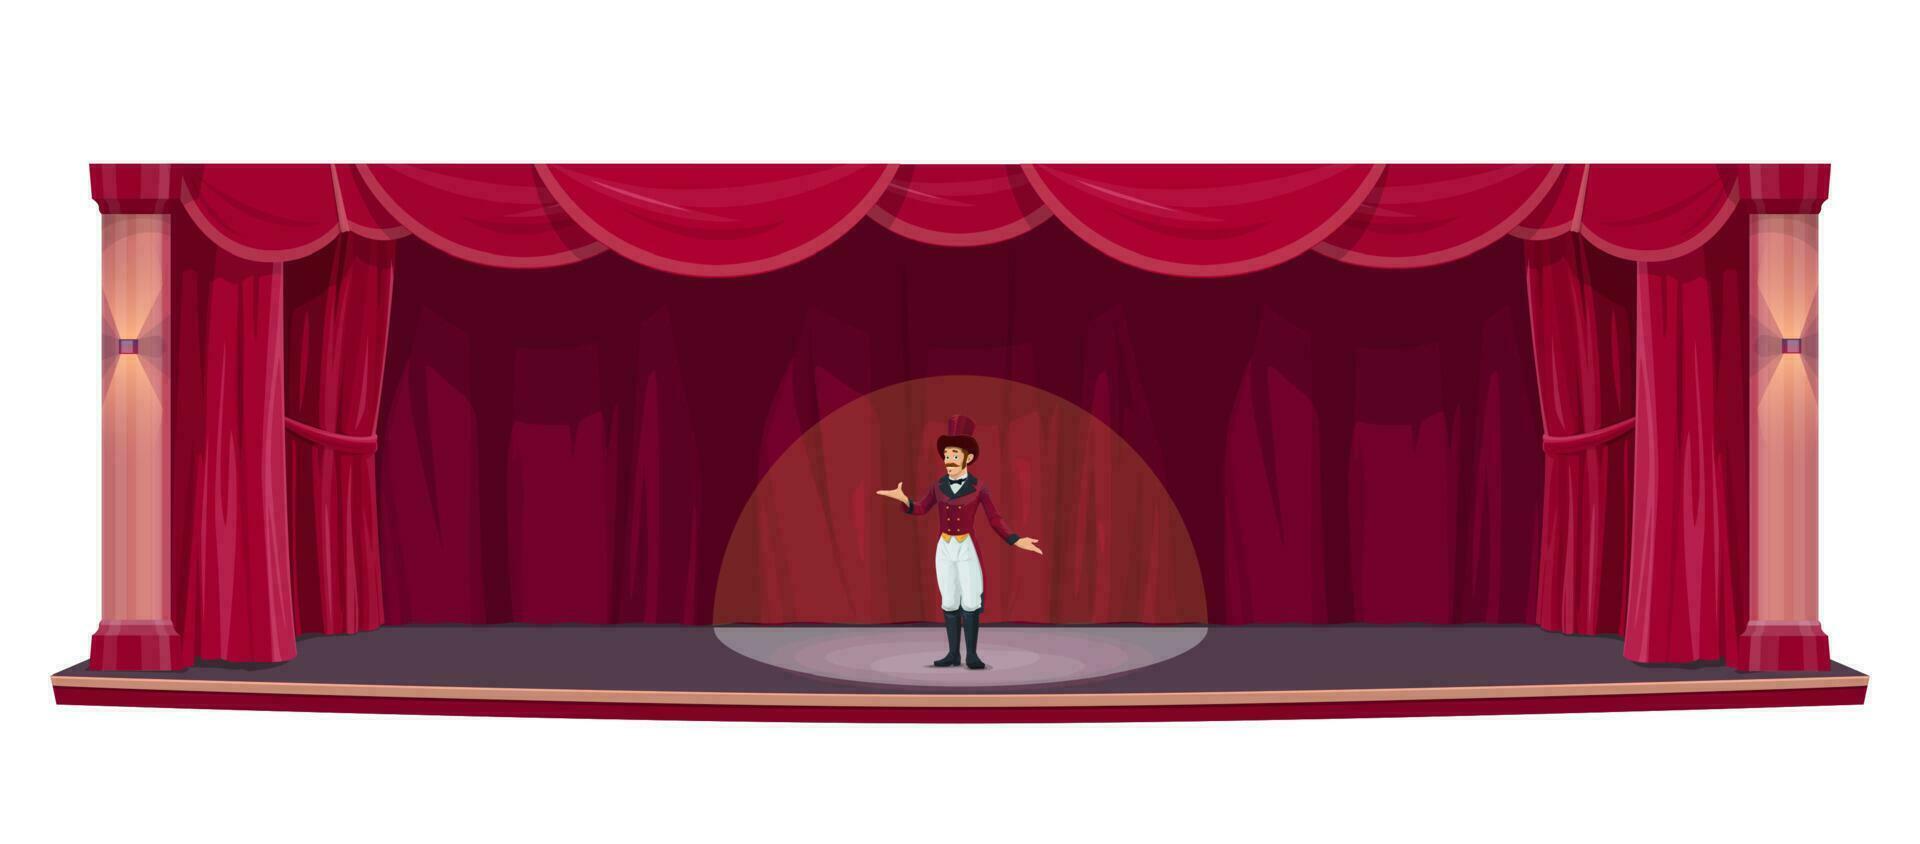 teatro etapa vermelho cortinas cortinas, ator mostrar vetor